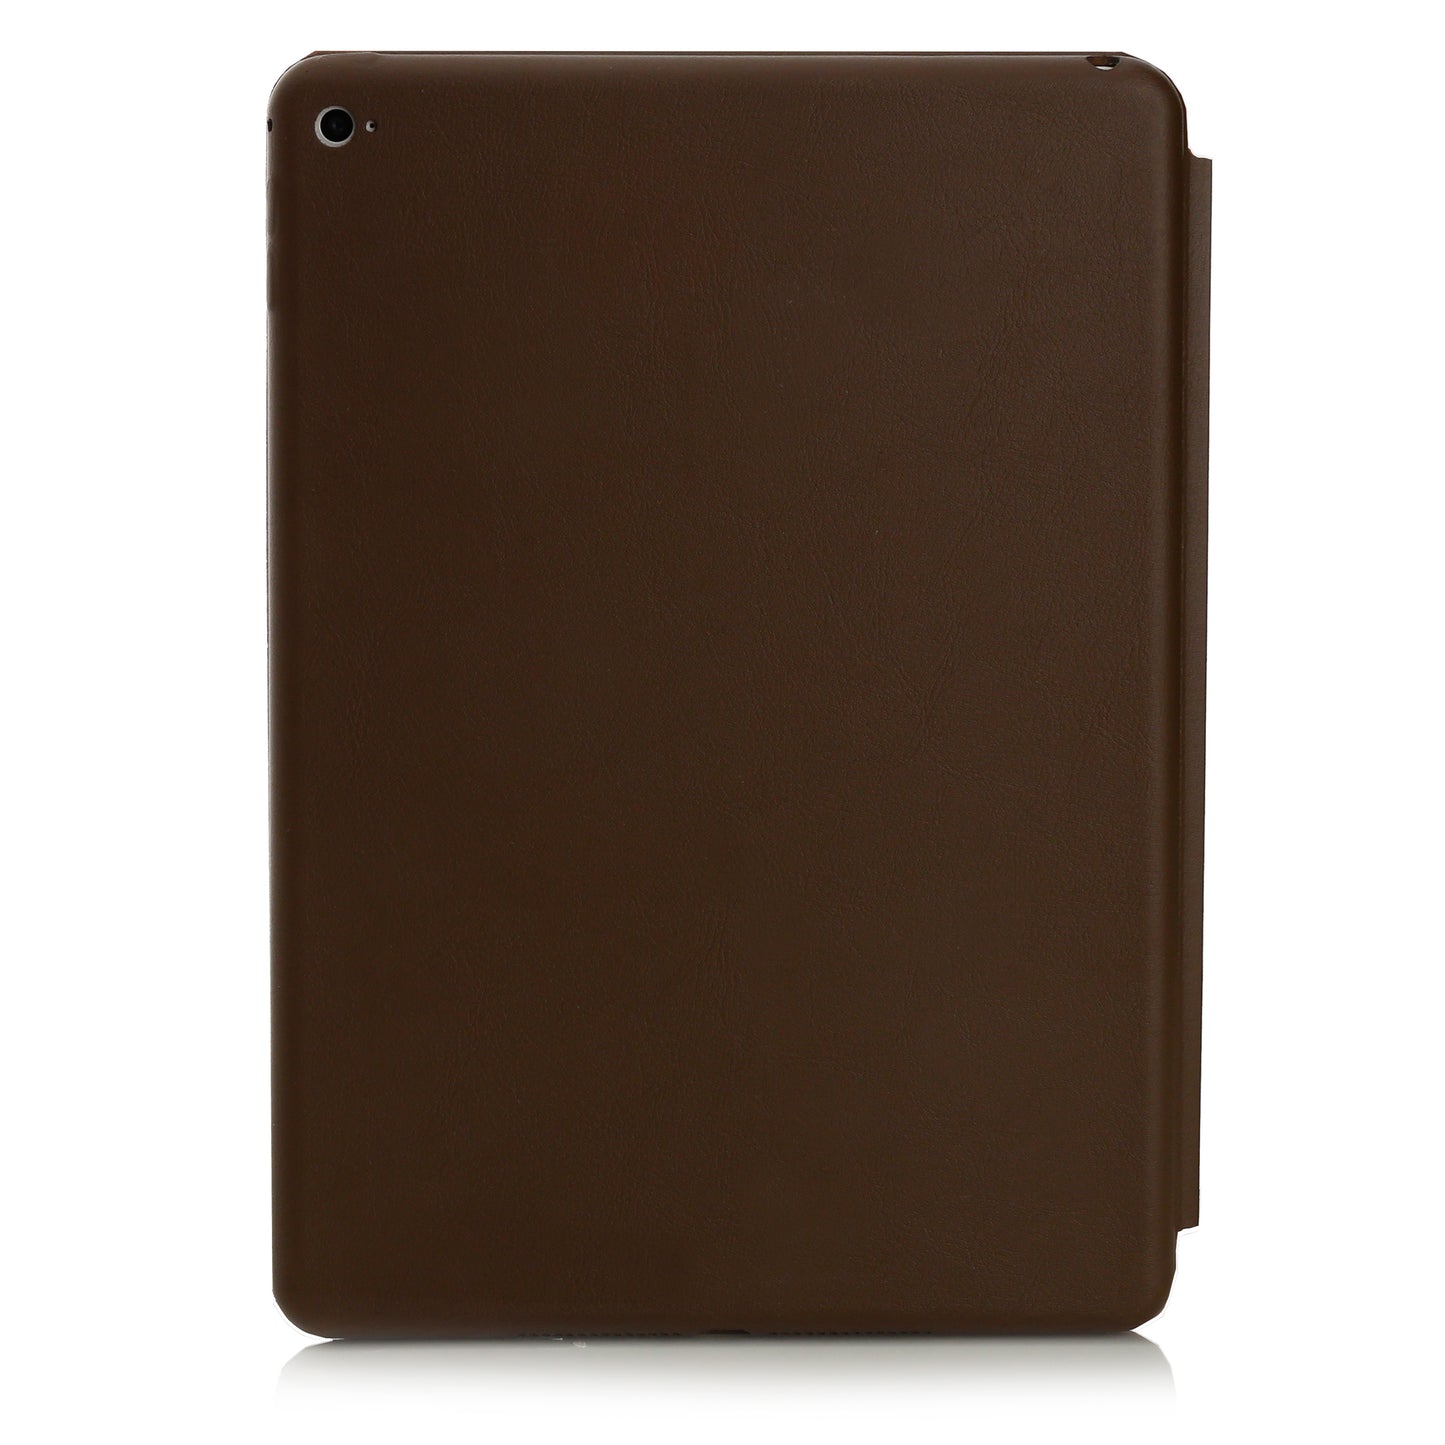 iCEO iPad SmartCover Case